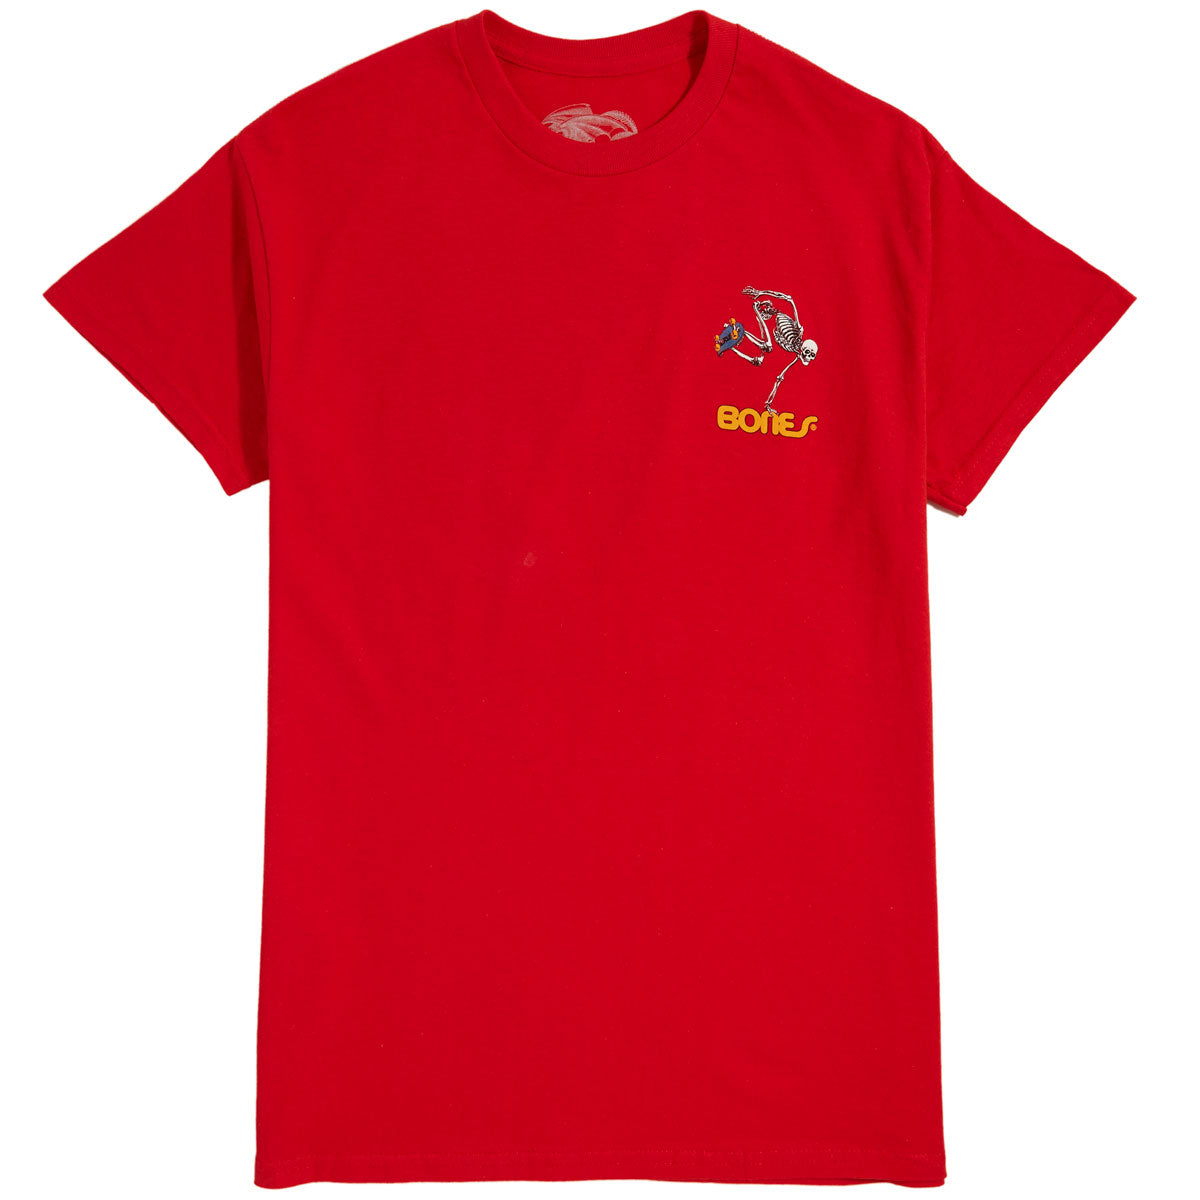 Powell-Peralta Skateboard Skeleton T-Shirt - Red image 2